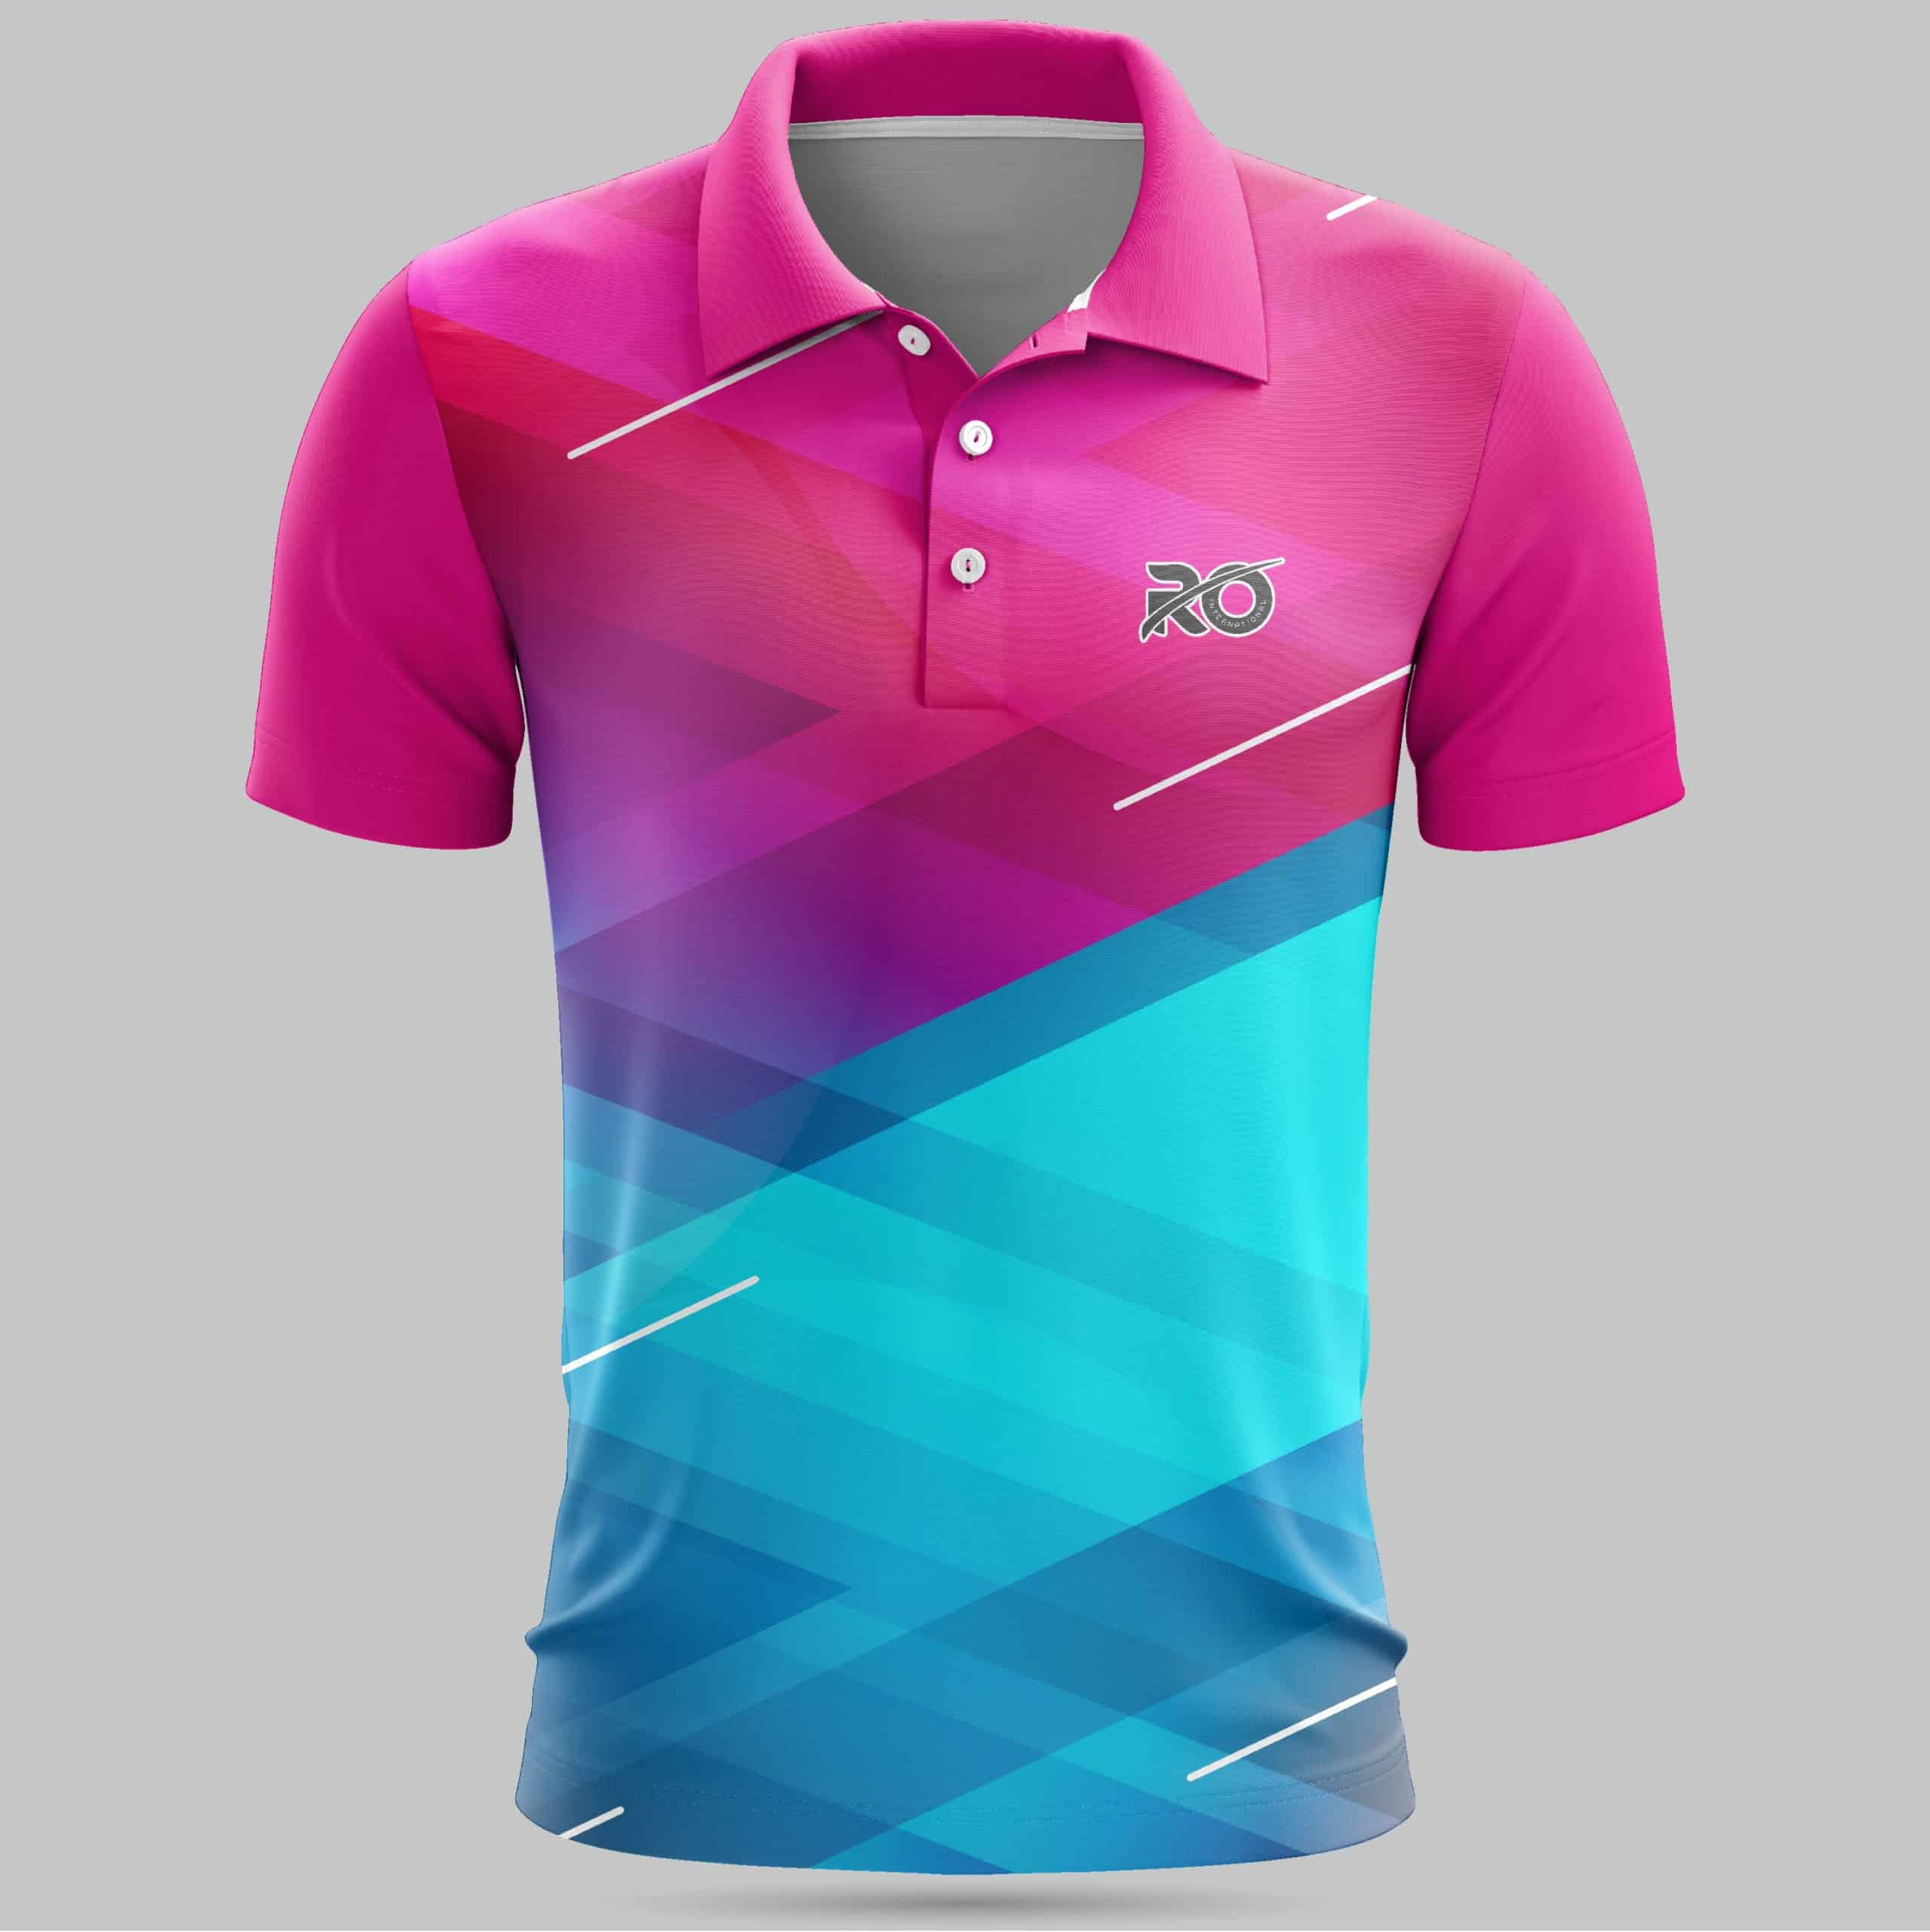 Ro Cricket Jersey Pink Blue - RO International